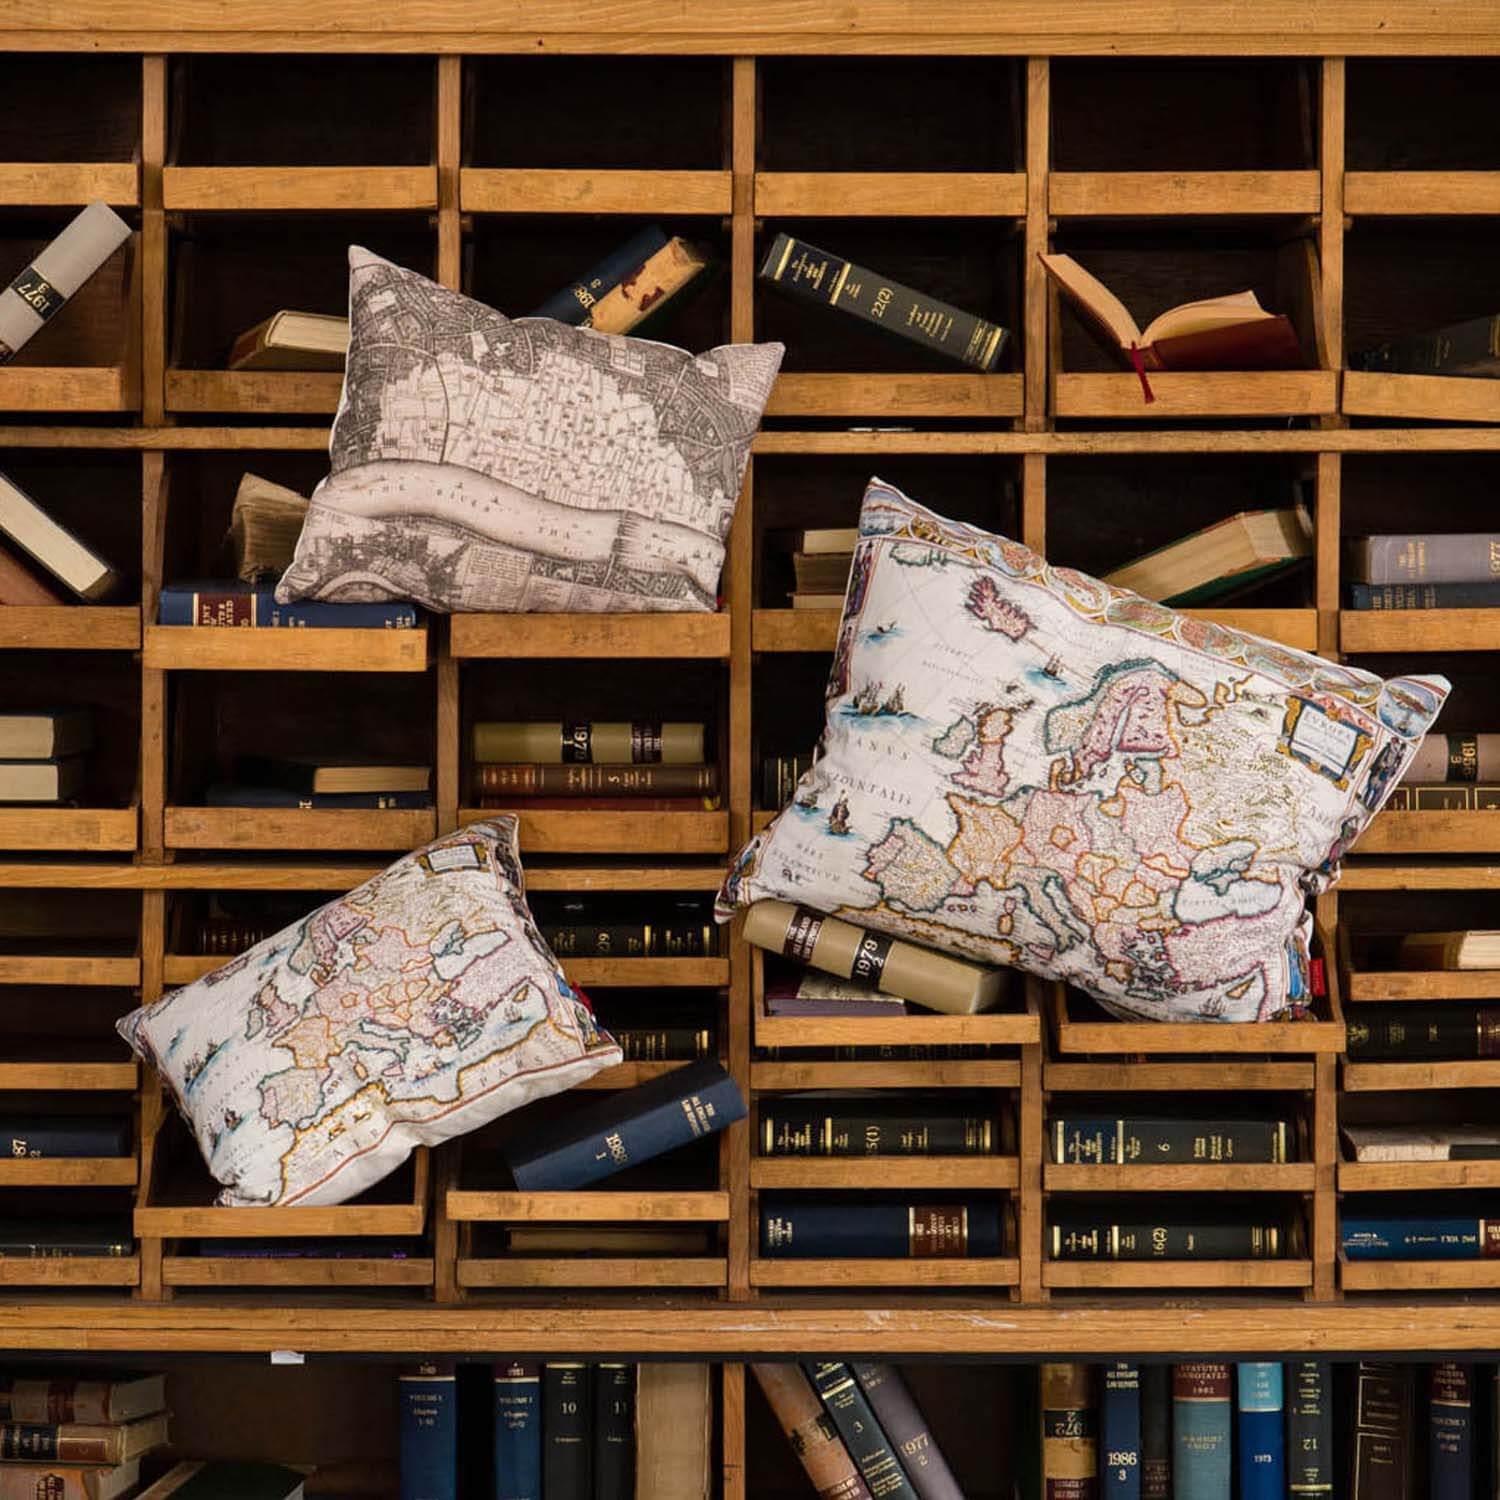 Map of Canterbury1 - British Library Cushions - Handmade Cushions UK - WeLoveCushions